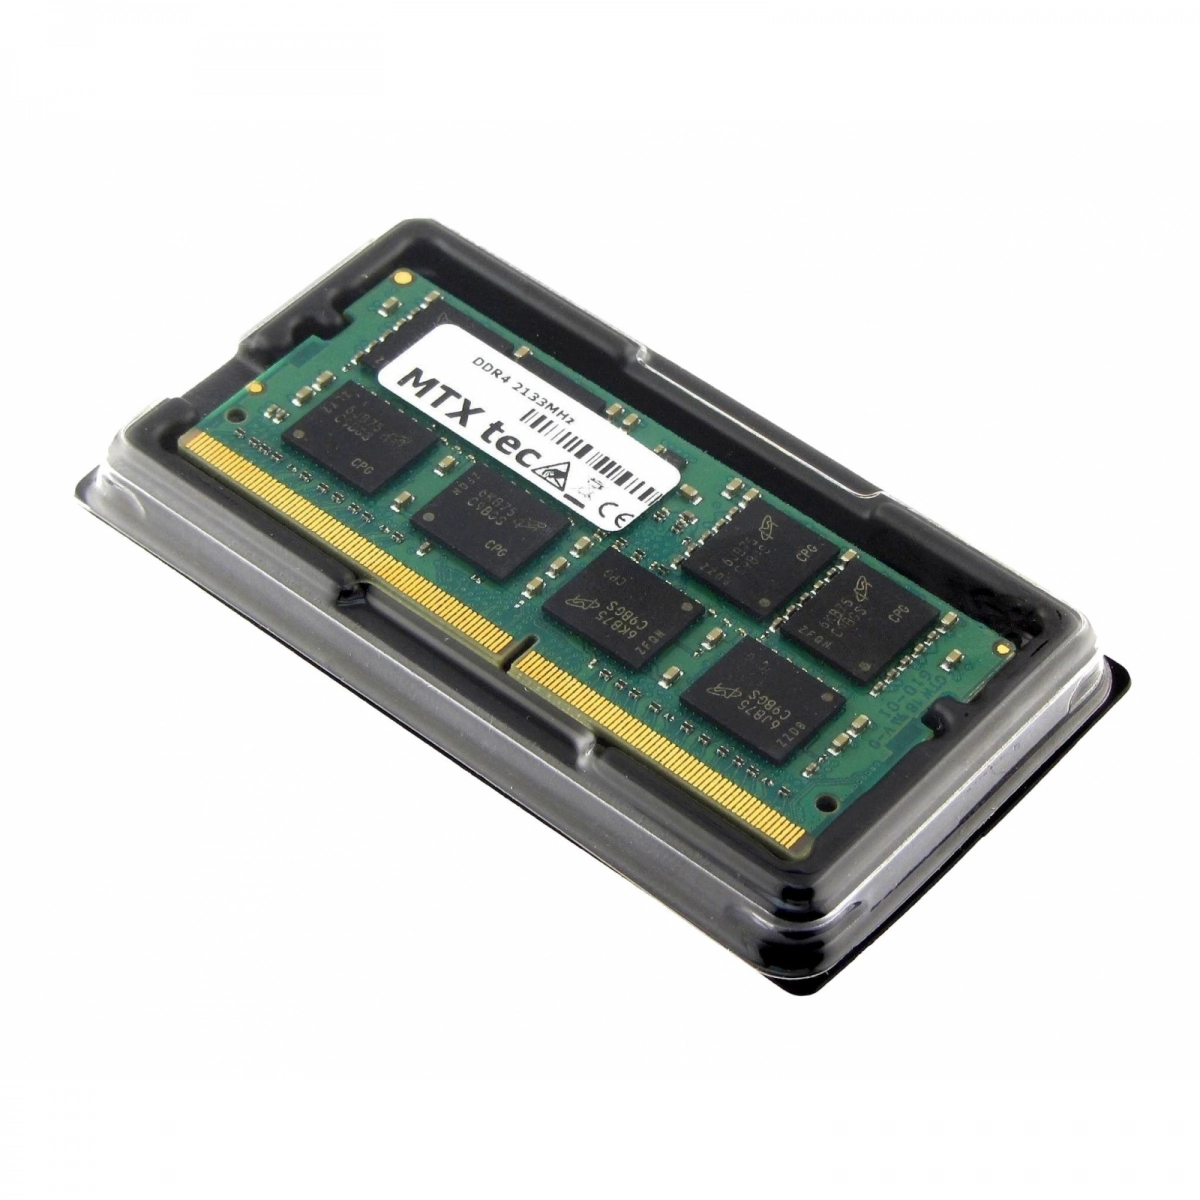 MTXtec Arbeitsspeicher 16 GB RAM für FUJITSU LifeBook E756